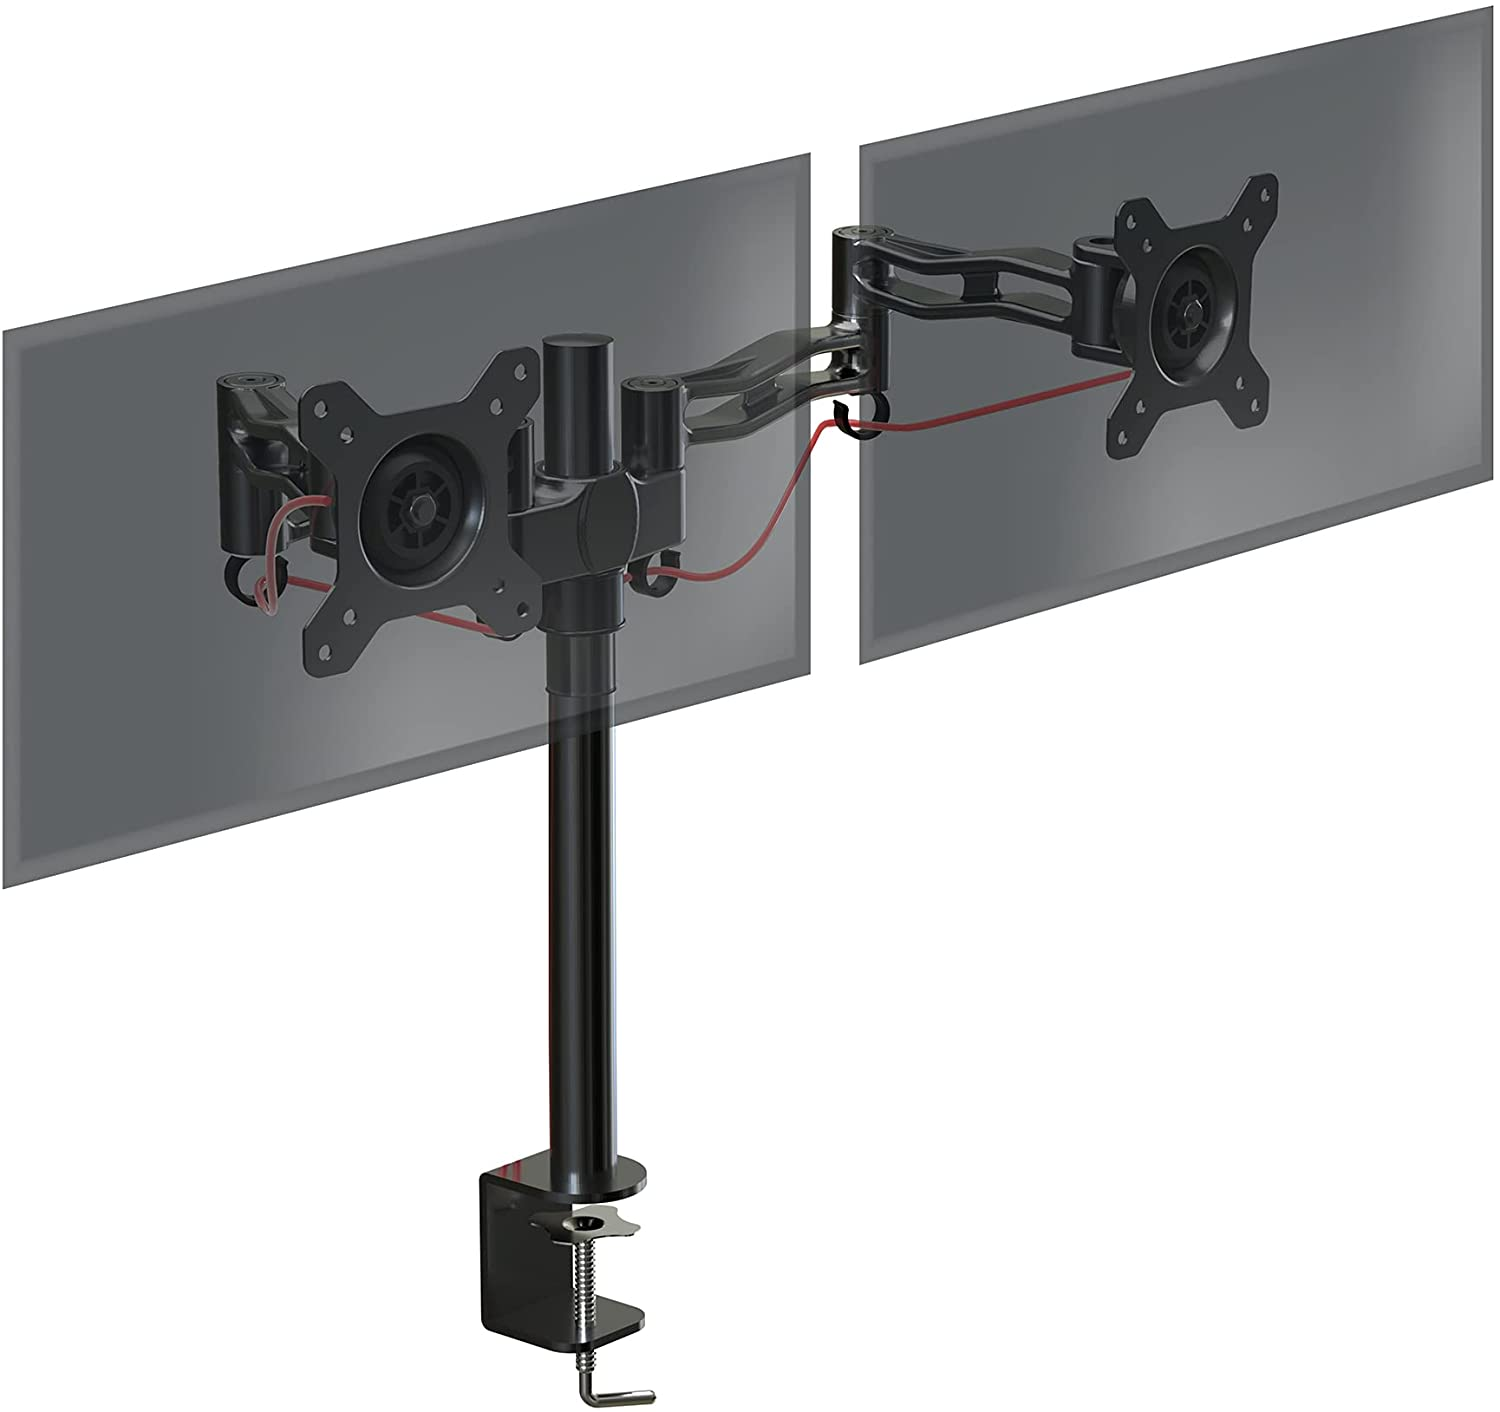 Duronic Dm352 Bk soporte para 2 monitores de 13 27 pulgadas con doble brazo 8kg altura ajustable giratorio inclinable pantallas tv led qav63ox0g2